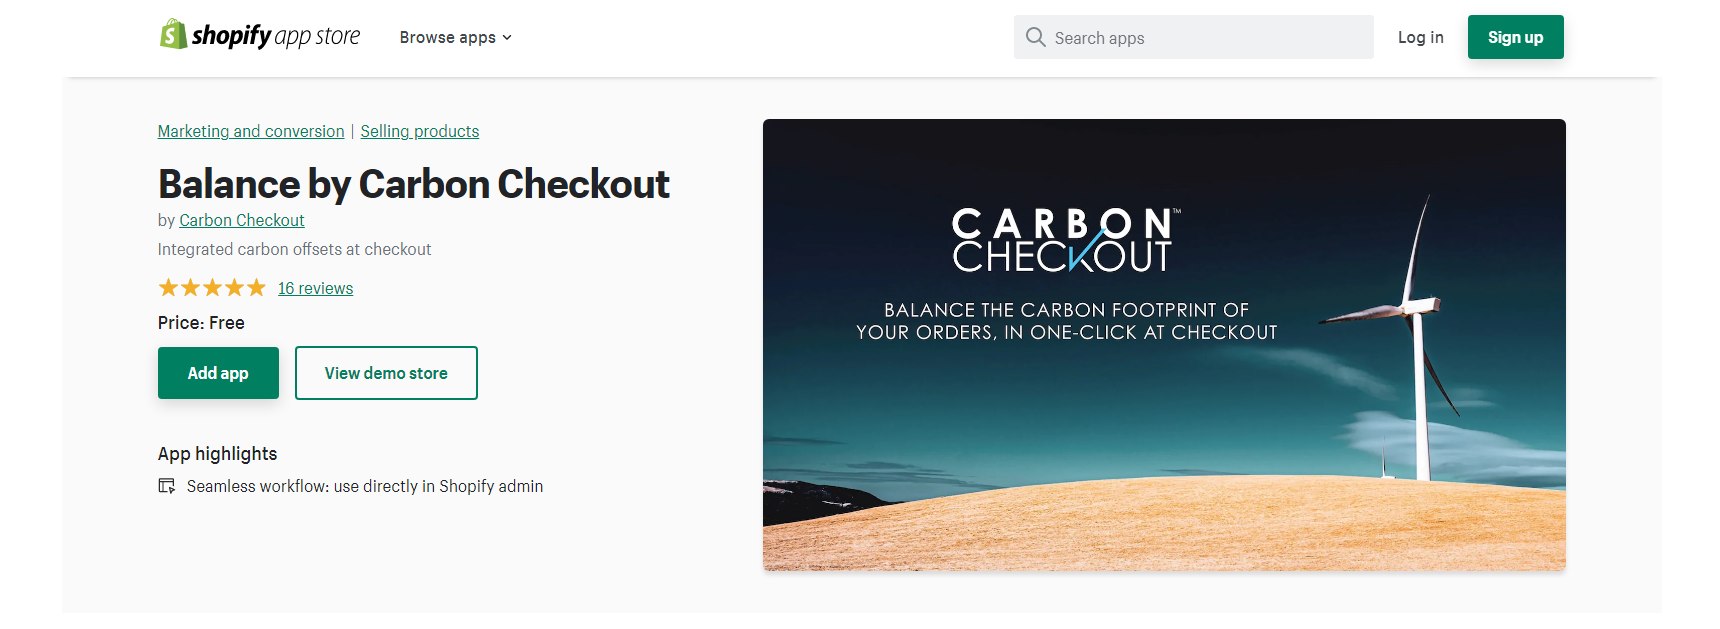 Balance by Carbon Checkout - shopify checkout apps